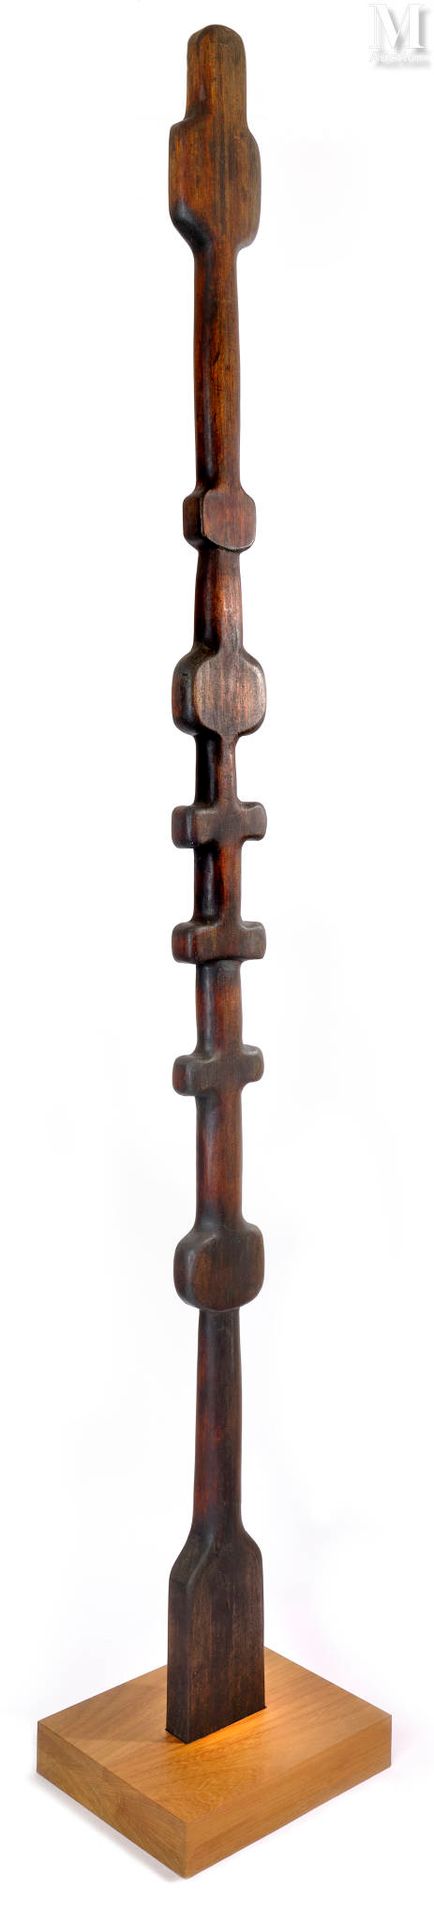 François STAHLY (1911-2006) 无标题

木雕
高度：248 厘米（包括底座）

出处 ：
艺术家工作室
法国私人收藏